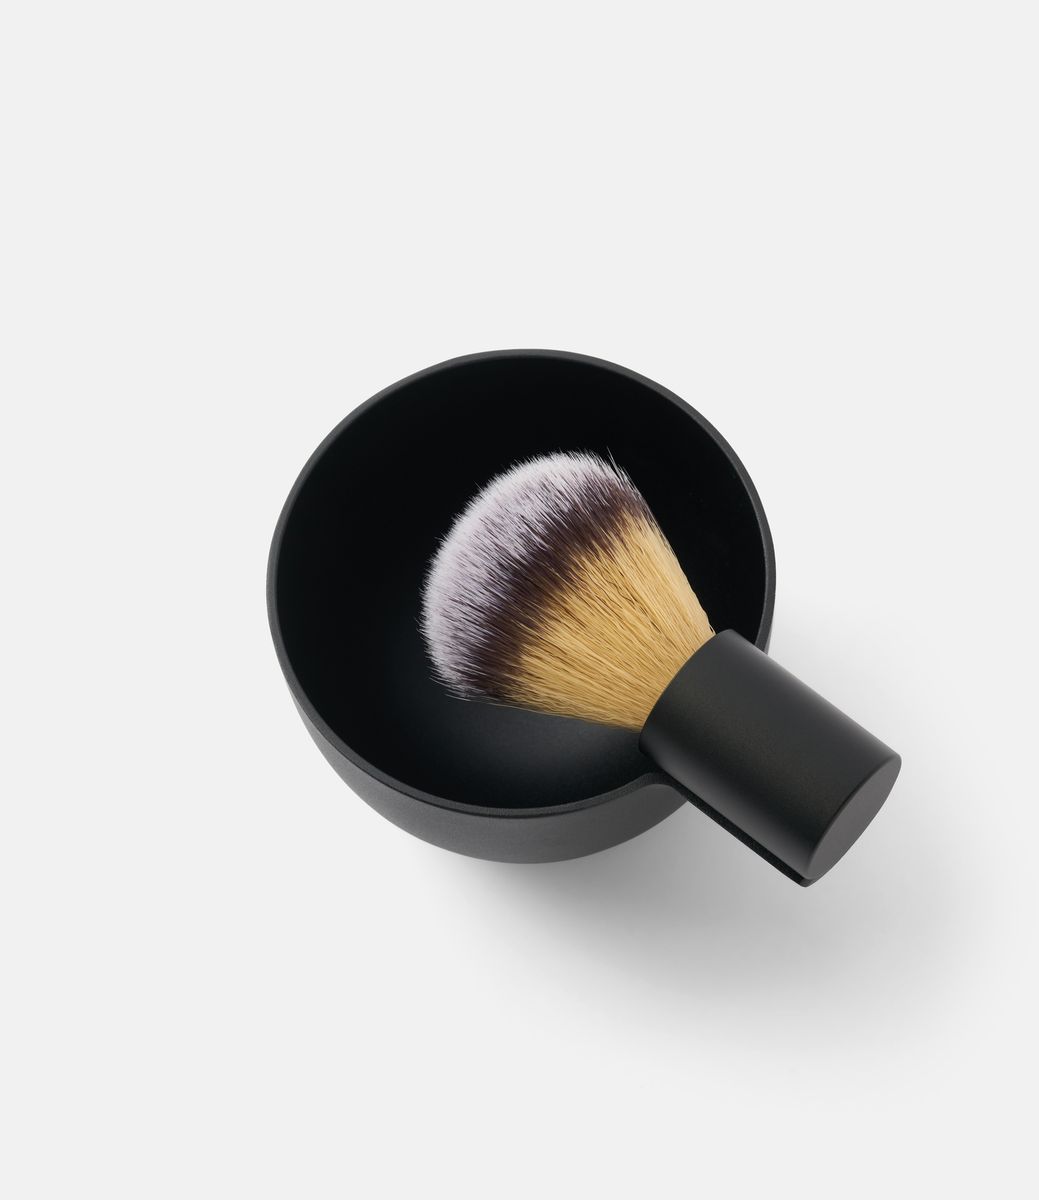 Morrama Brush and Bowl Black — набор для бритья